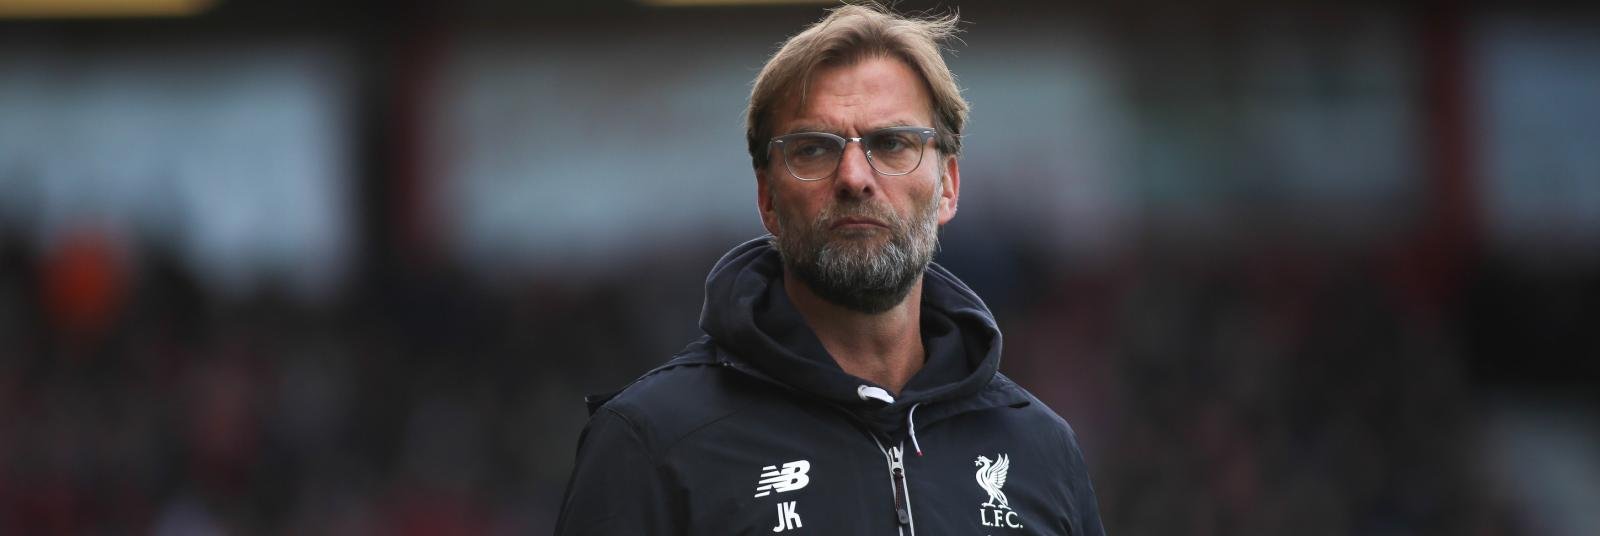 Jurgen Klopp signs new six-year deal as Liverpool manager